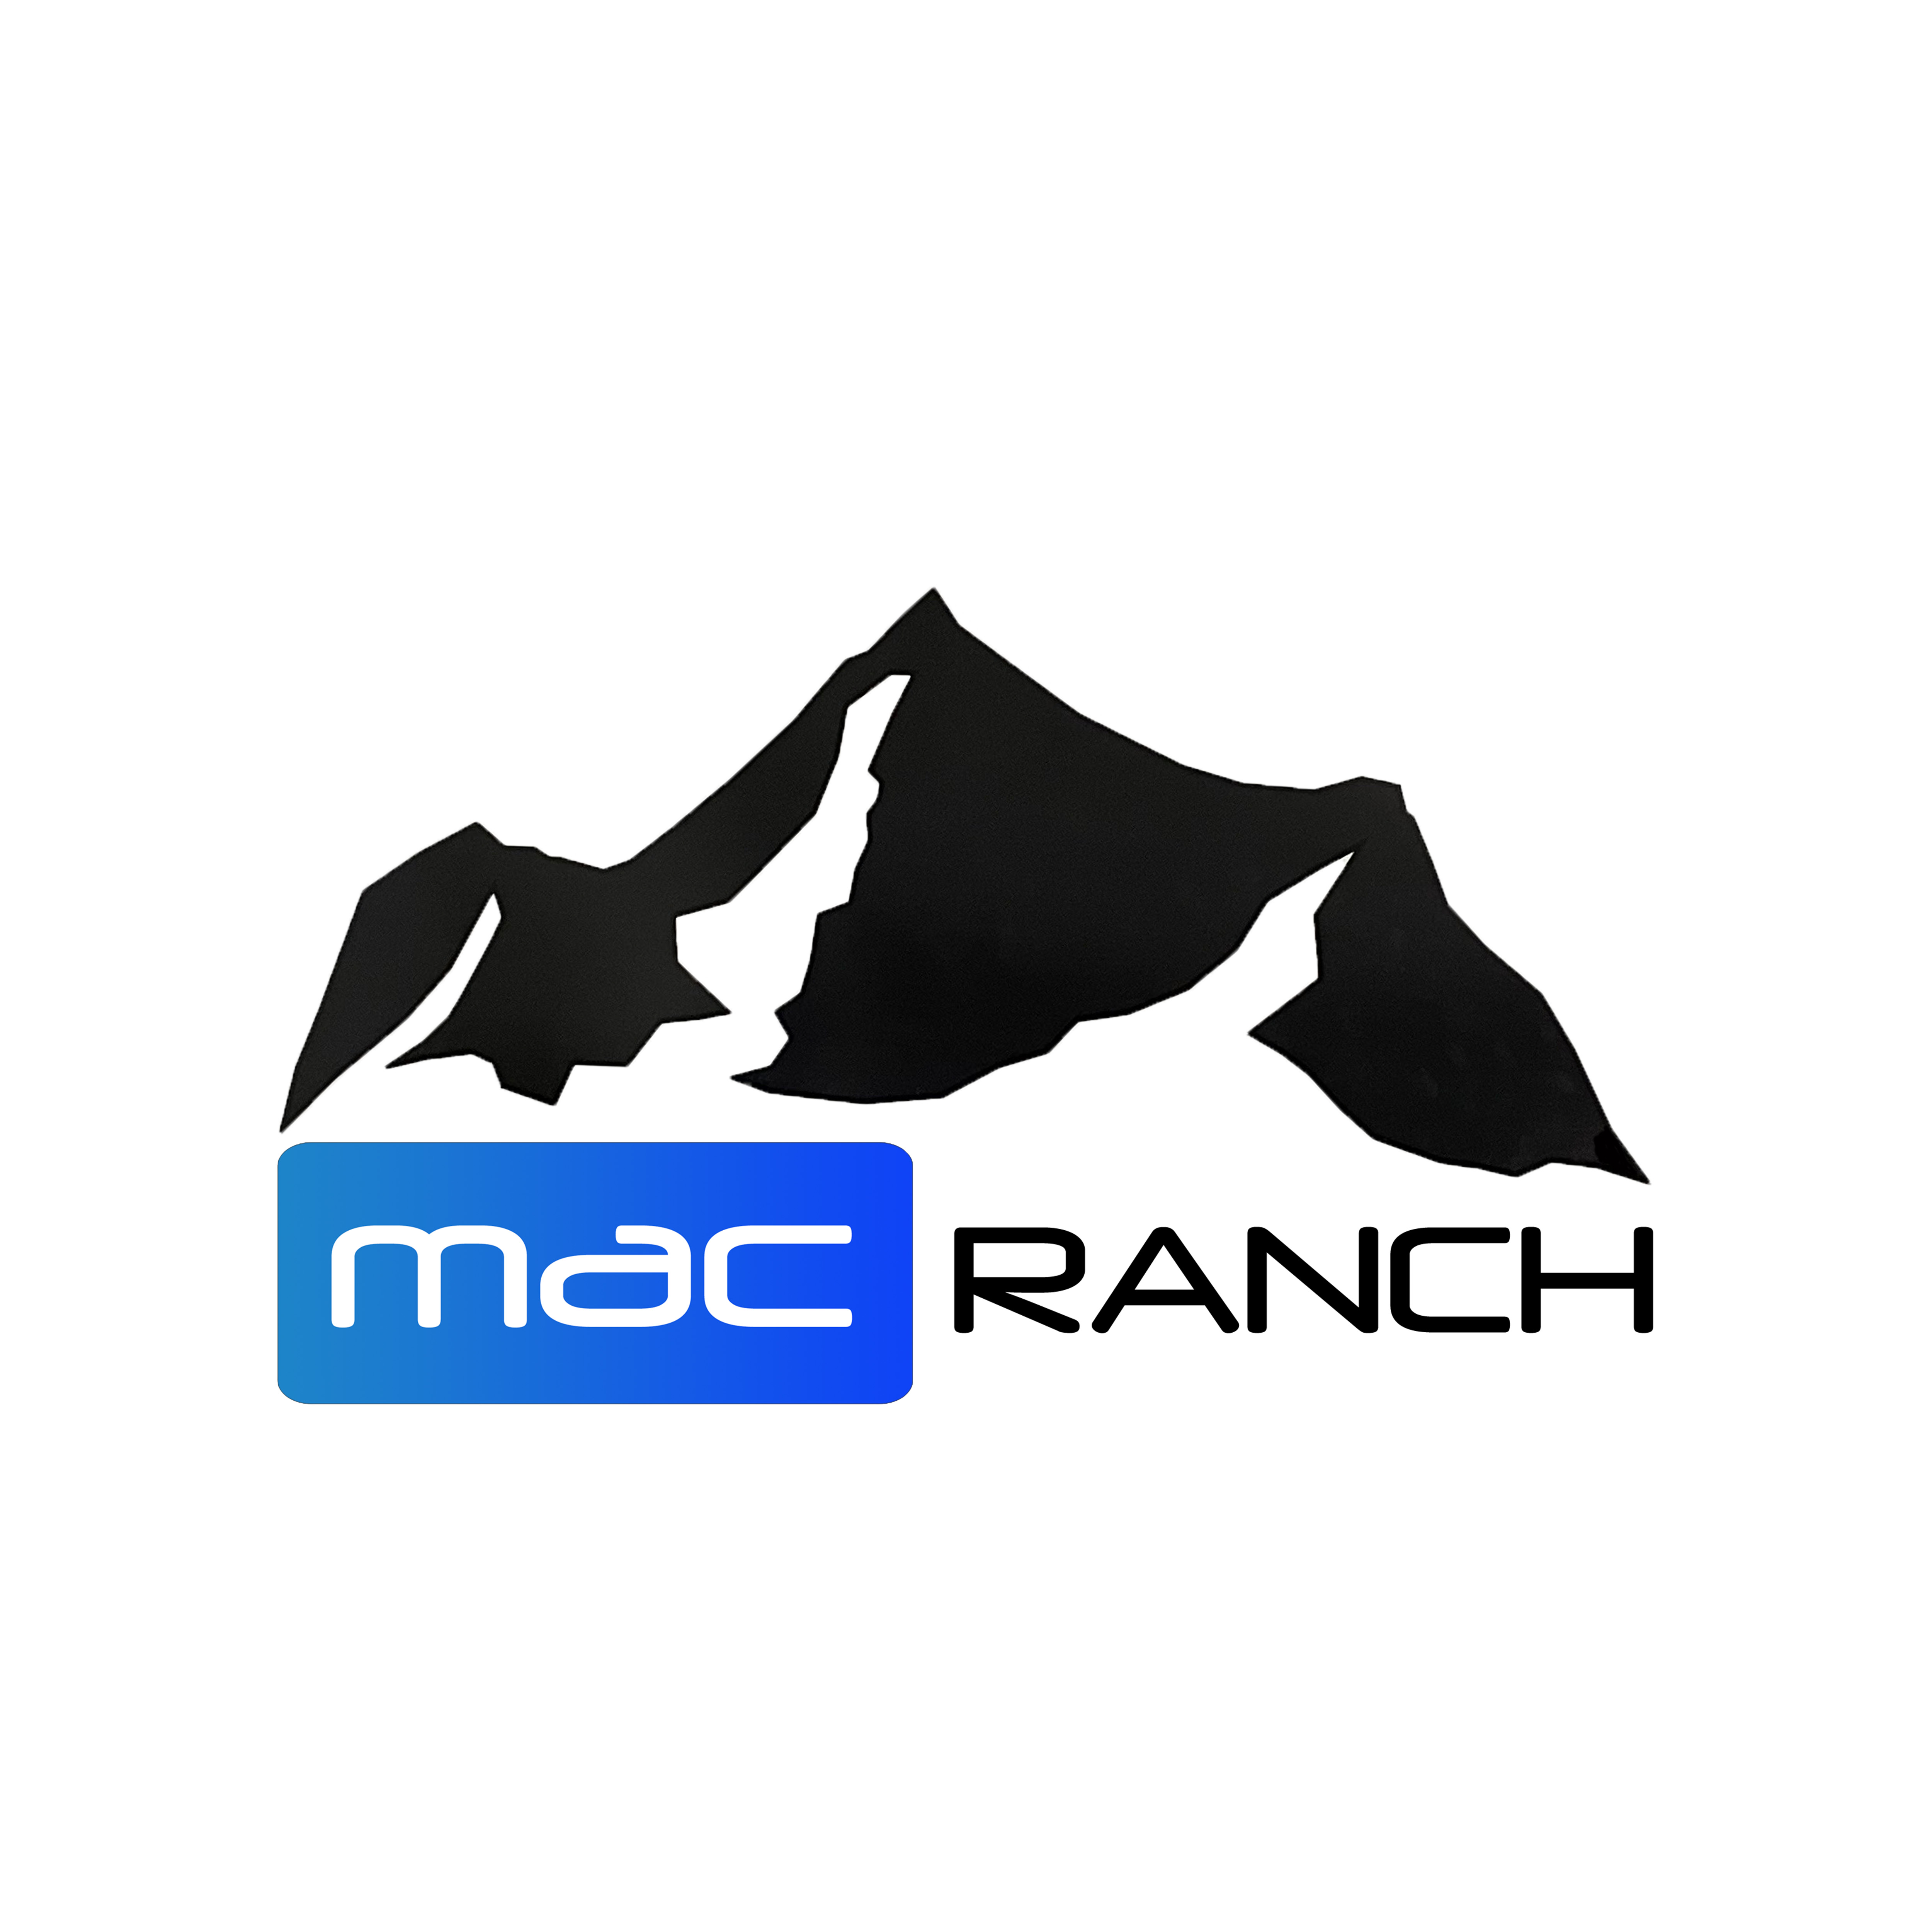 The Mac Ranch